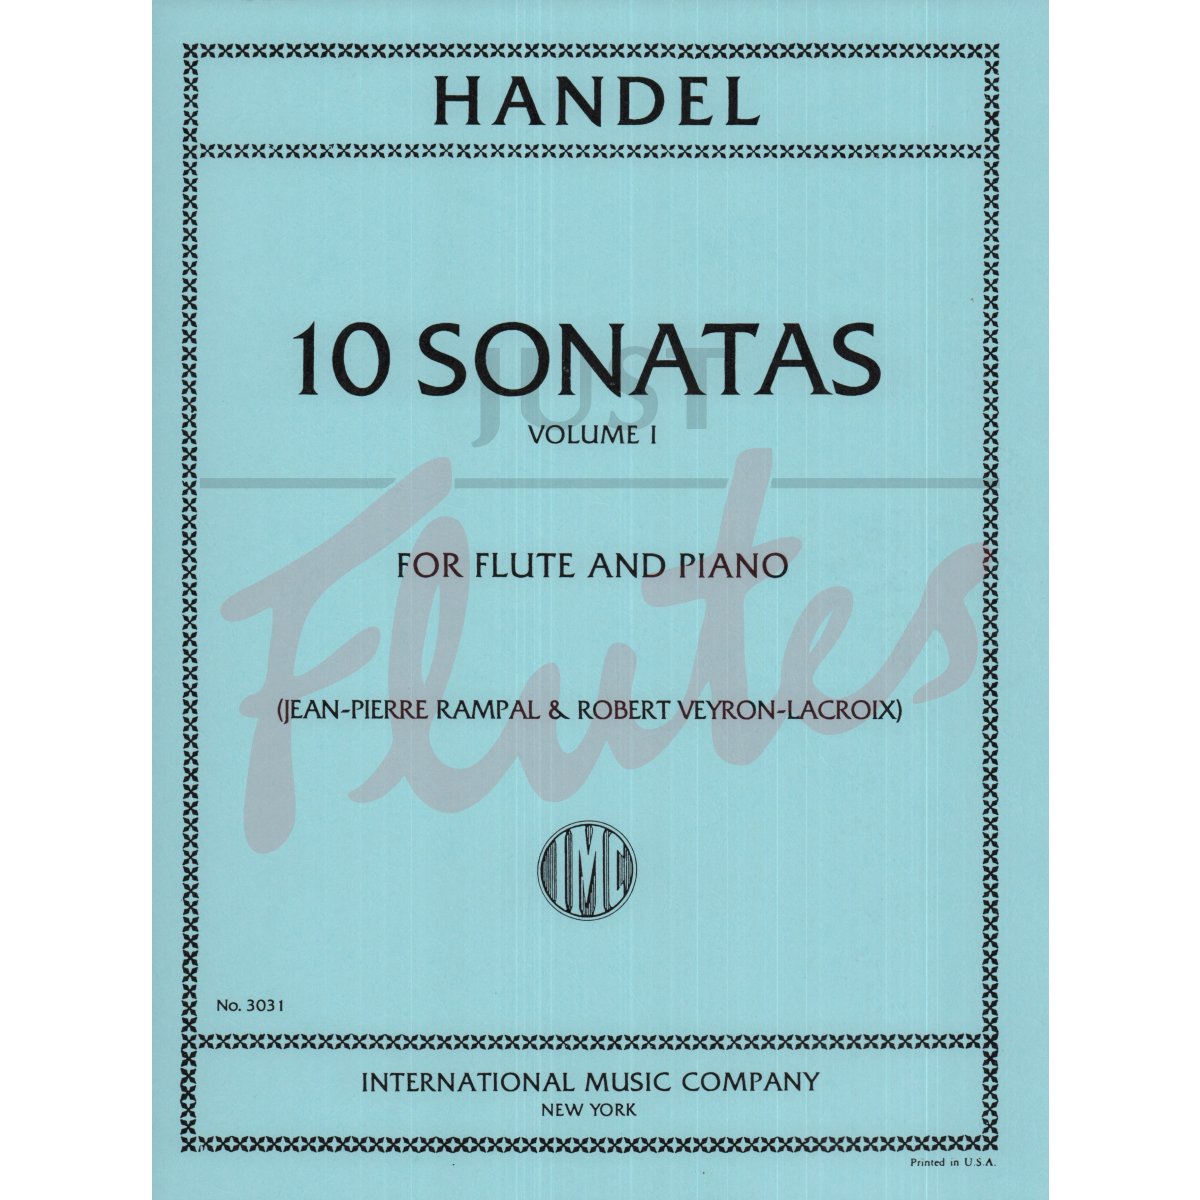 10 Sonatas for Flute and Piano, Volume 1